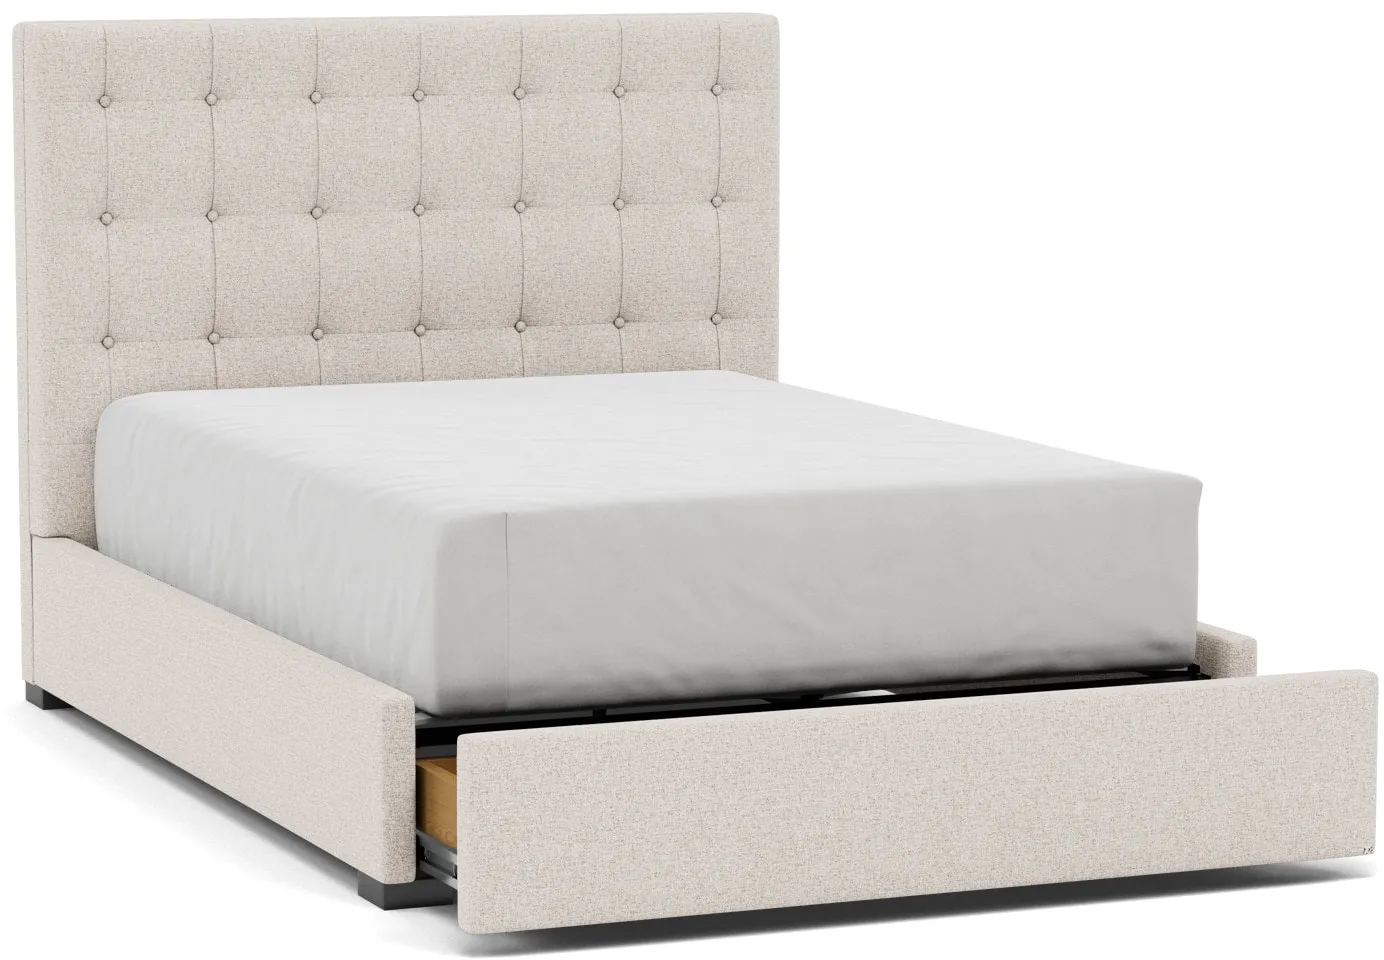 Abby Queen Upholstered Storage Bed in Merit Dove